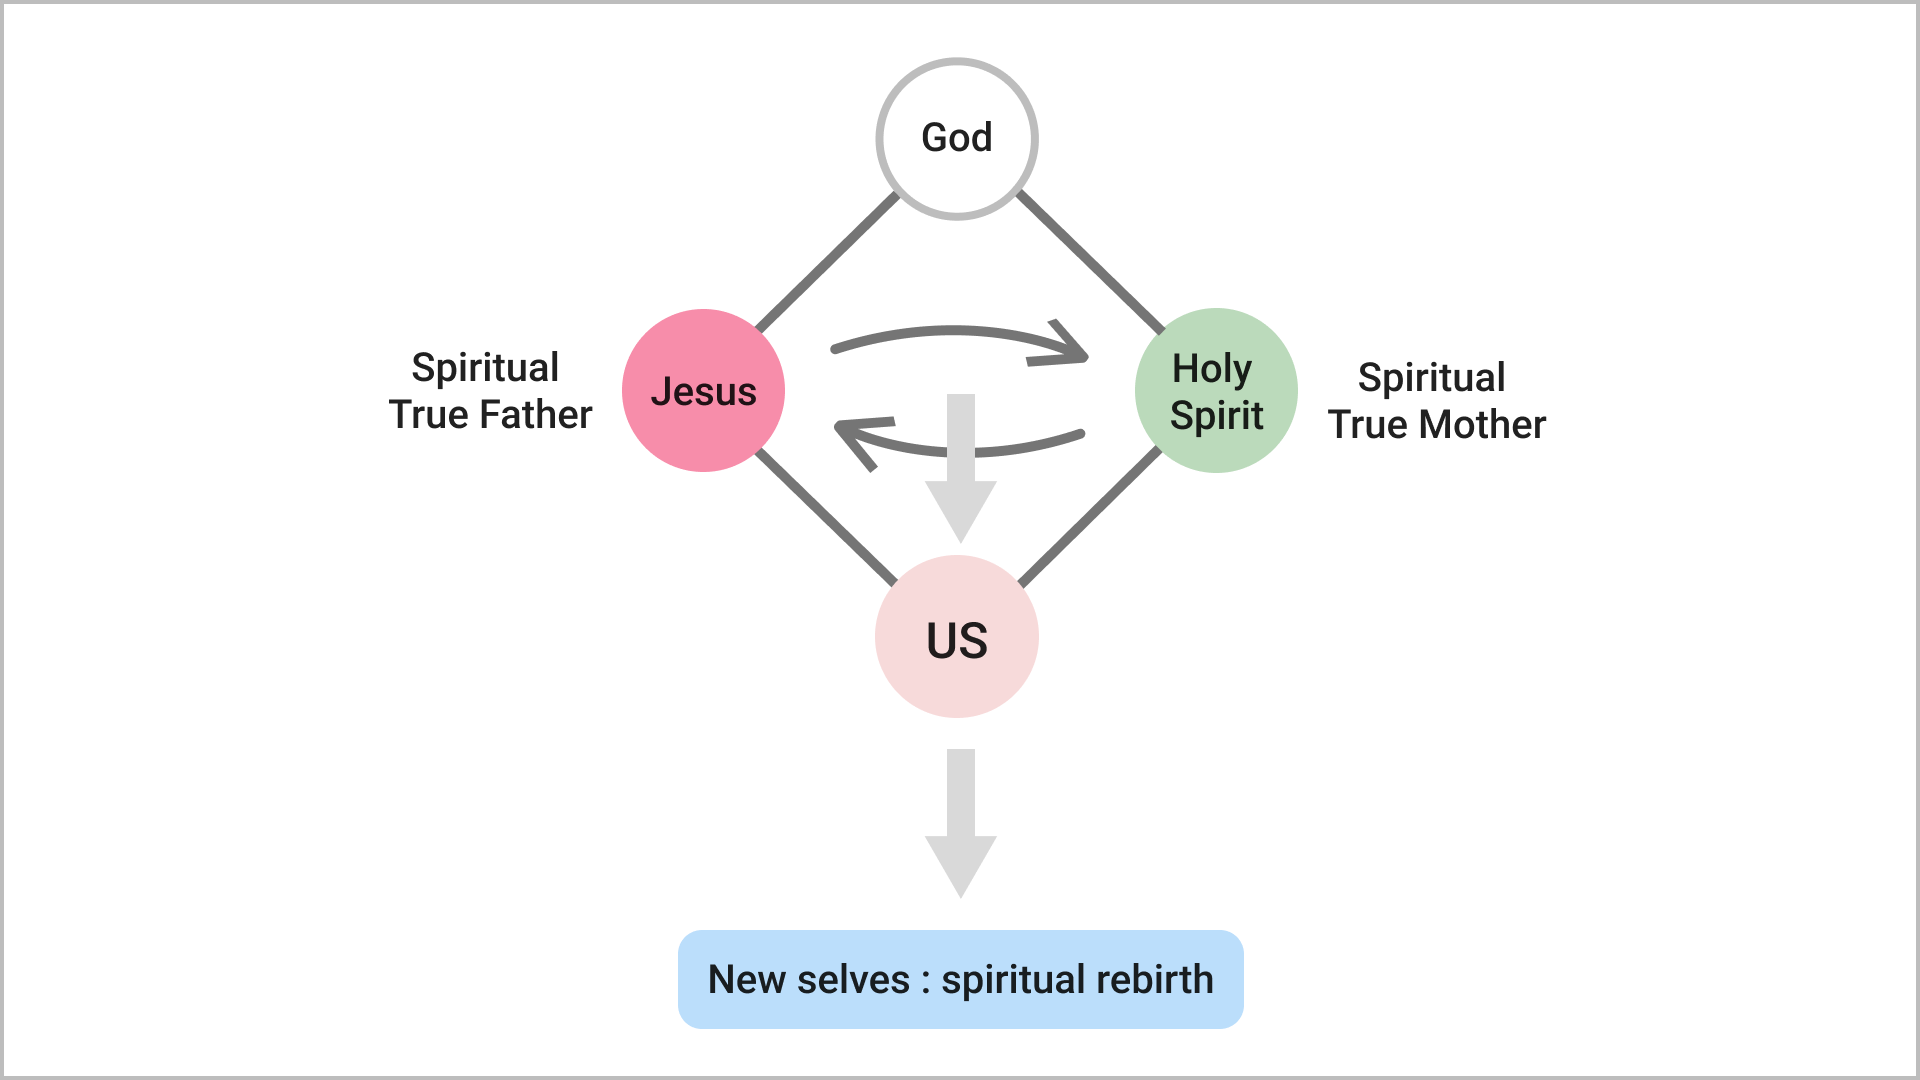 Spiritual Rebirth through Jesus and the Holy Spirit